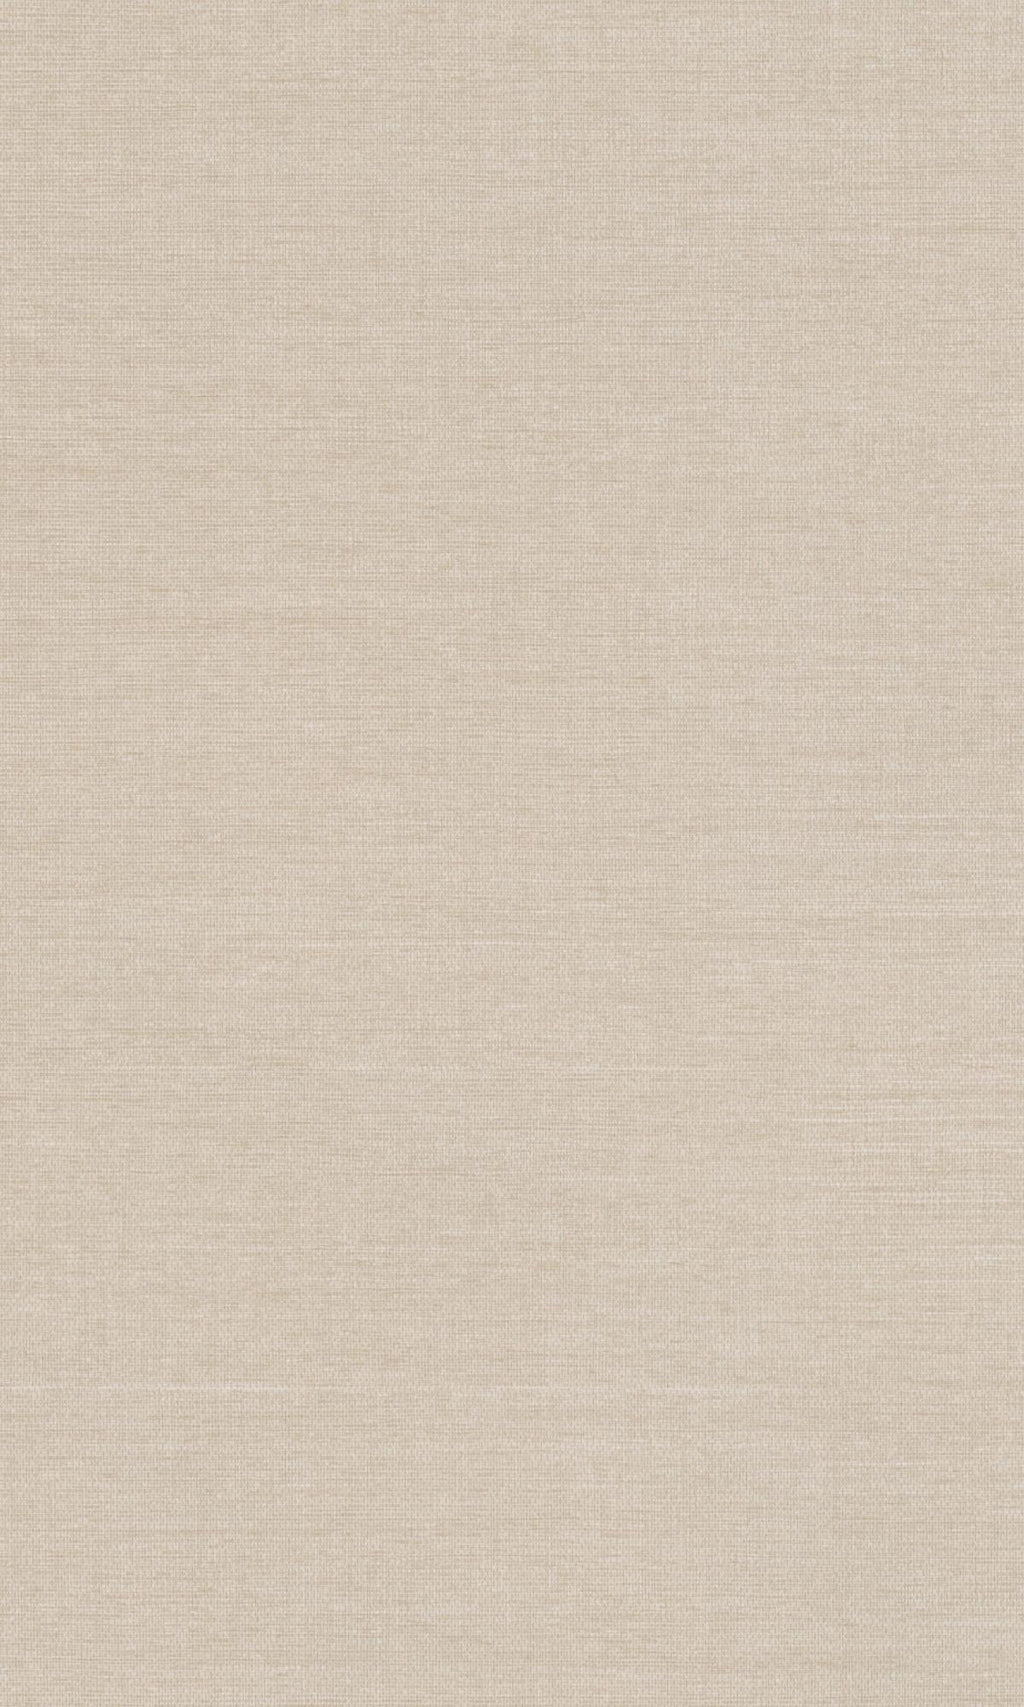 Brown Textured Commercial Wallpaper C7269